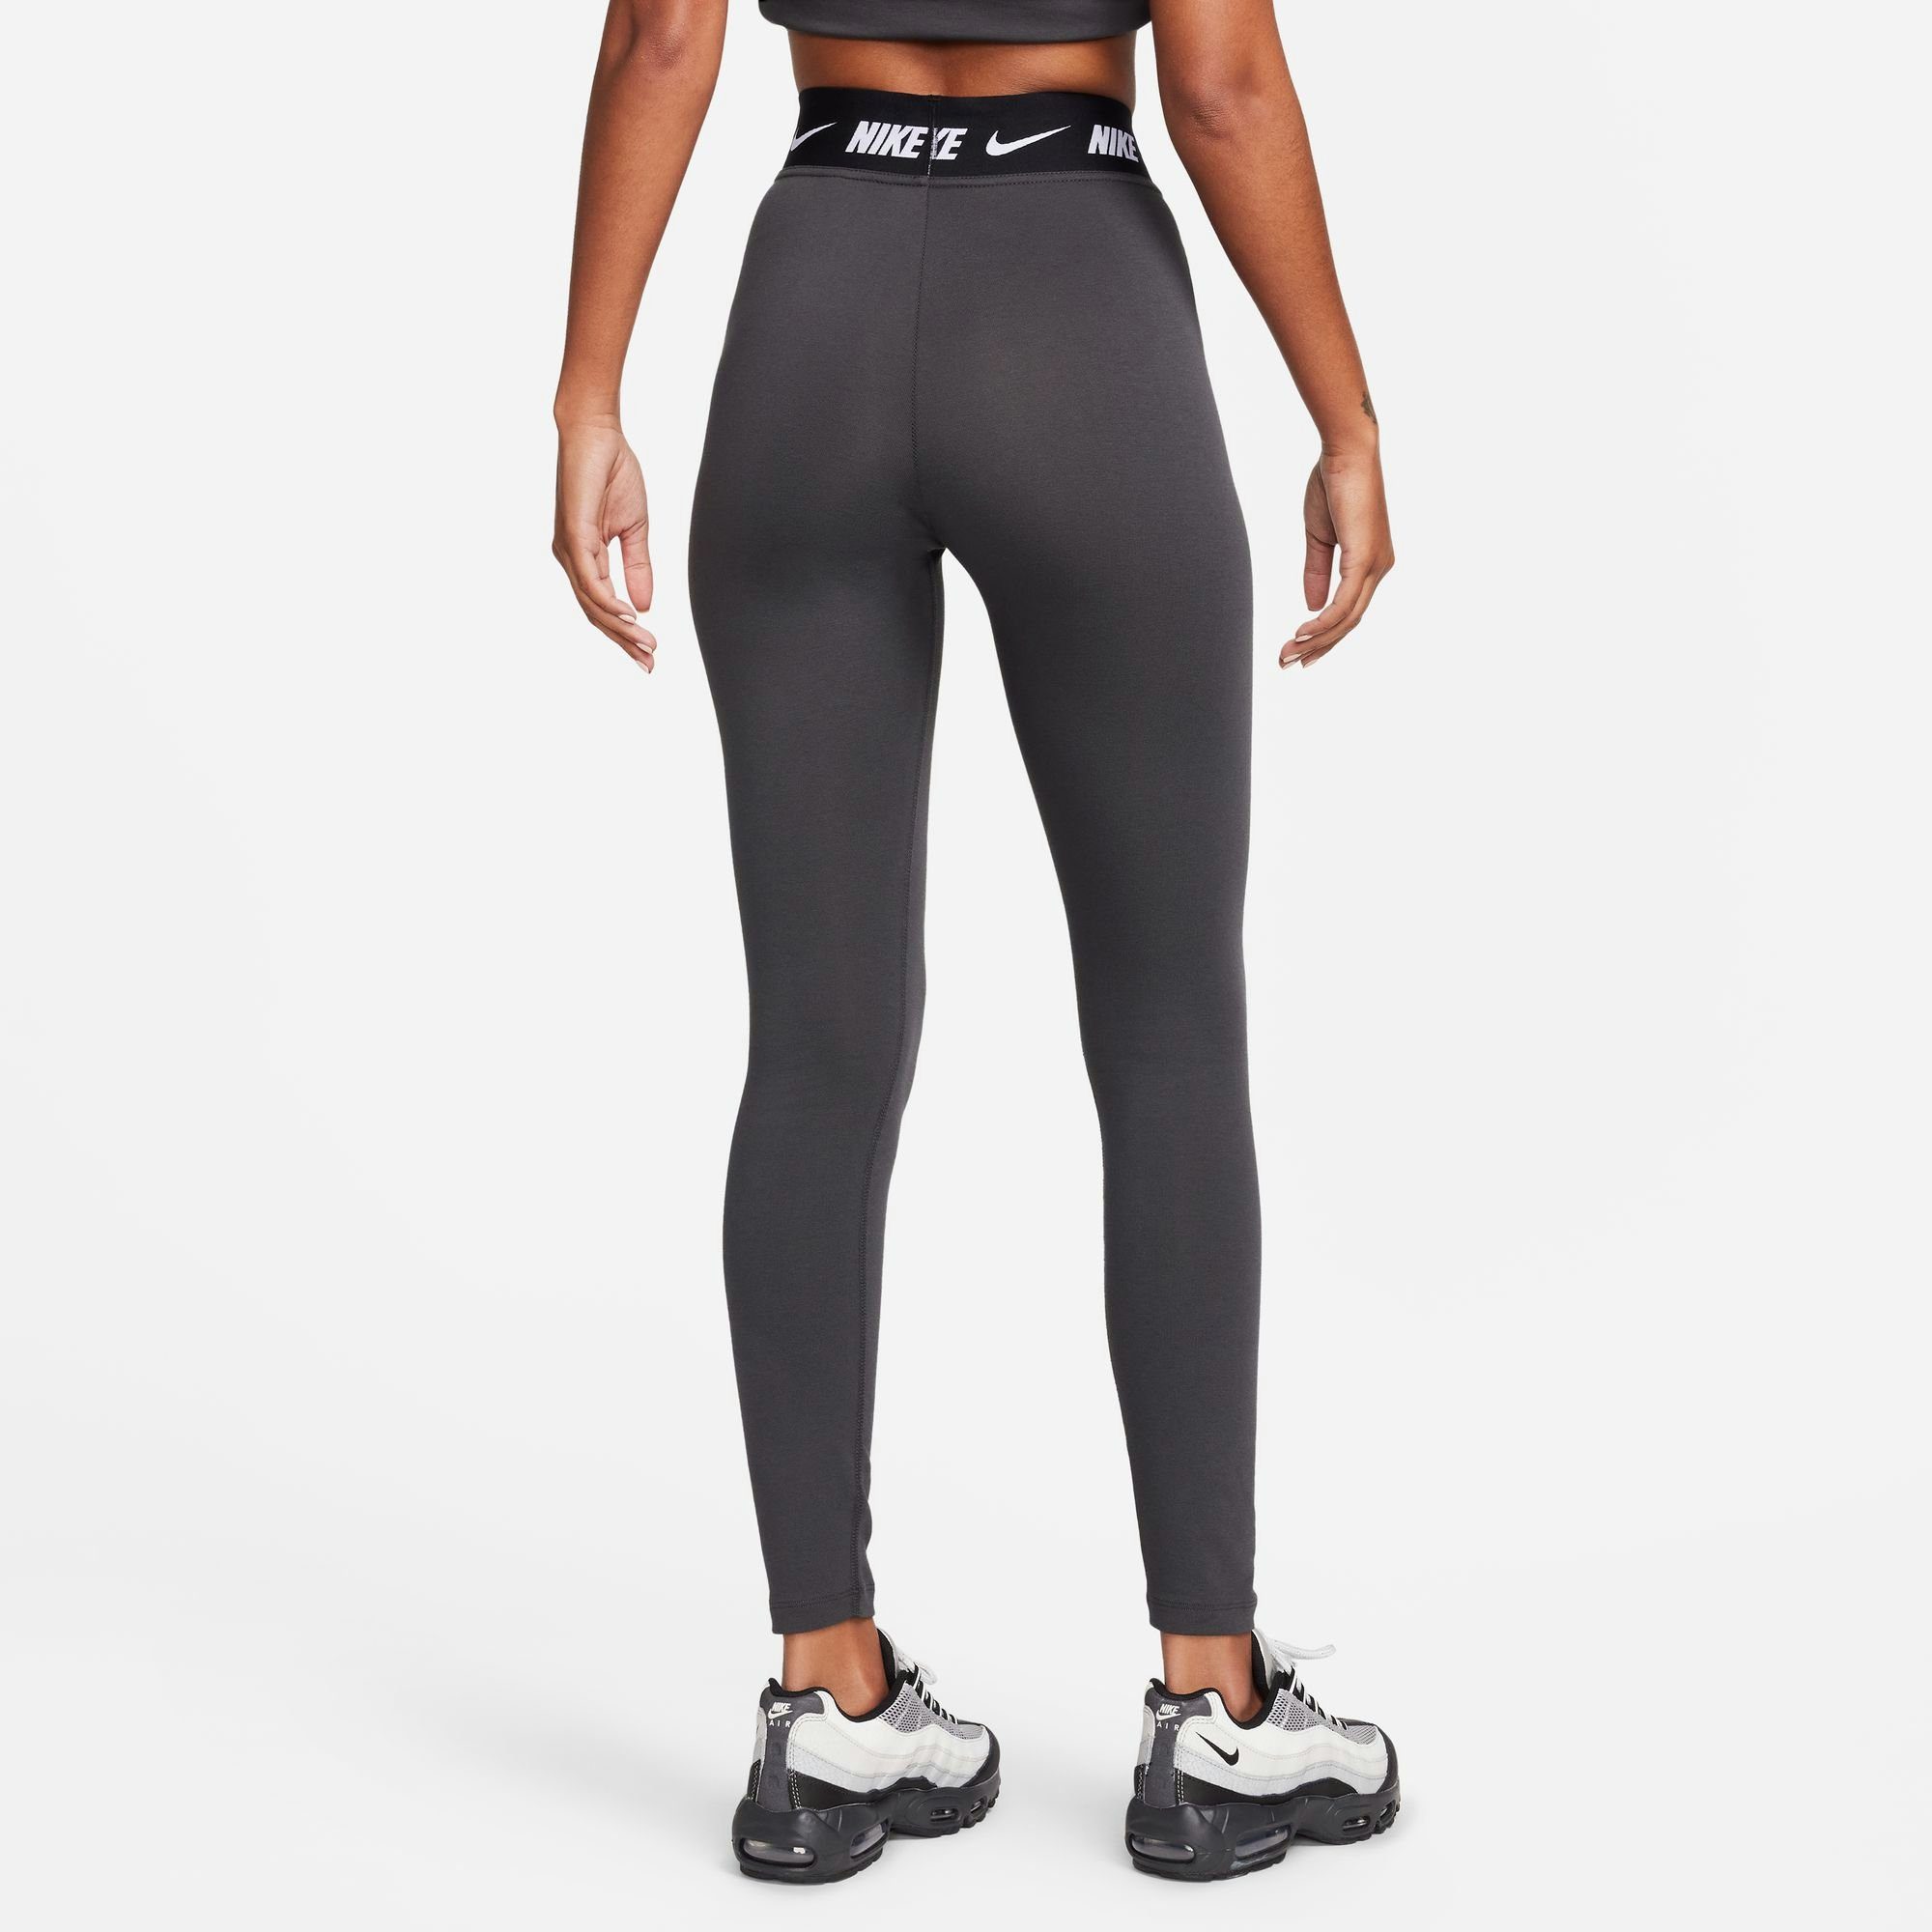 ANTHRACITE/BLACK LEGGINGS HIGH-WAISTED Nike WOMEN'S Leggings CLUB Sportswear